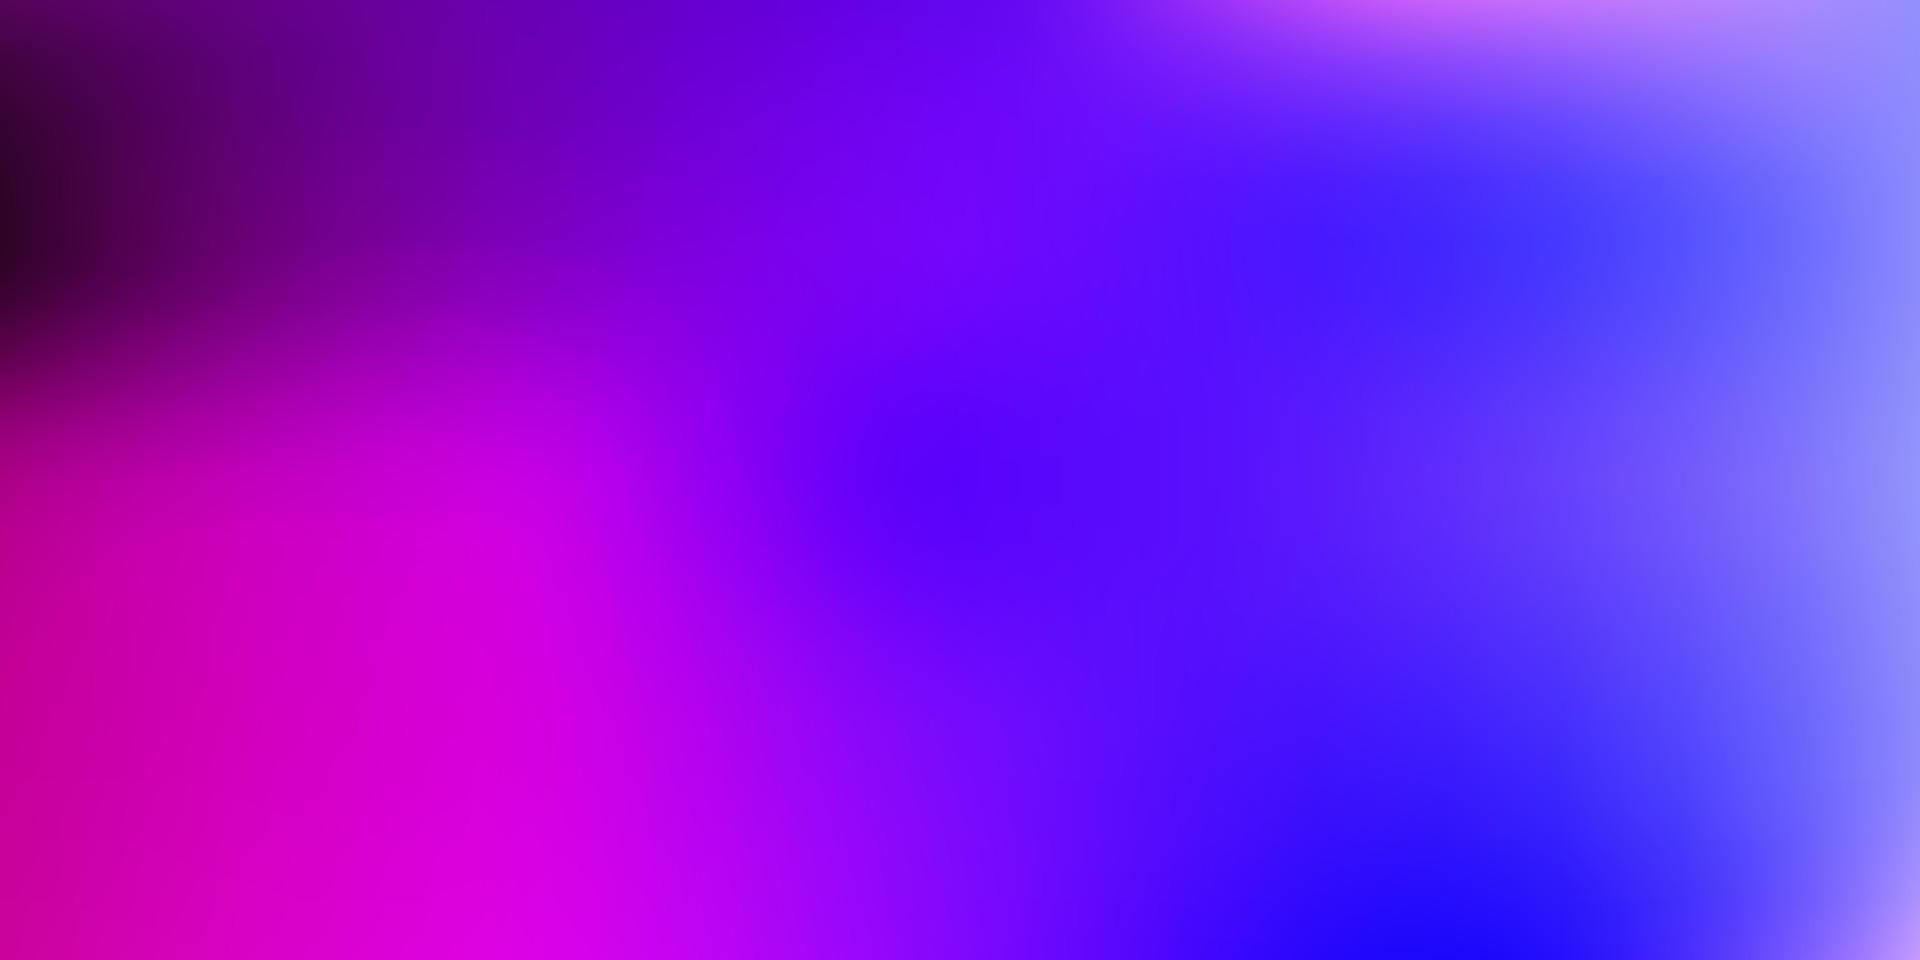 ljuslila, rosa vektor gradient oskärpa bakgrund.